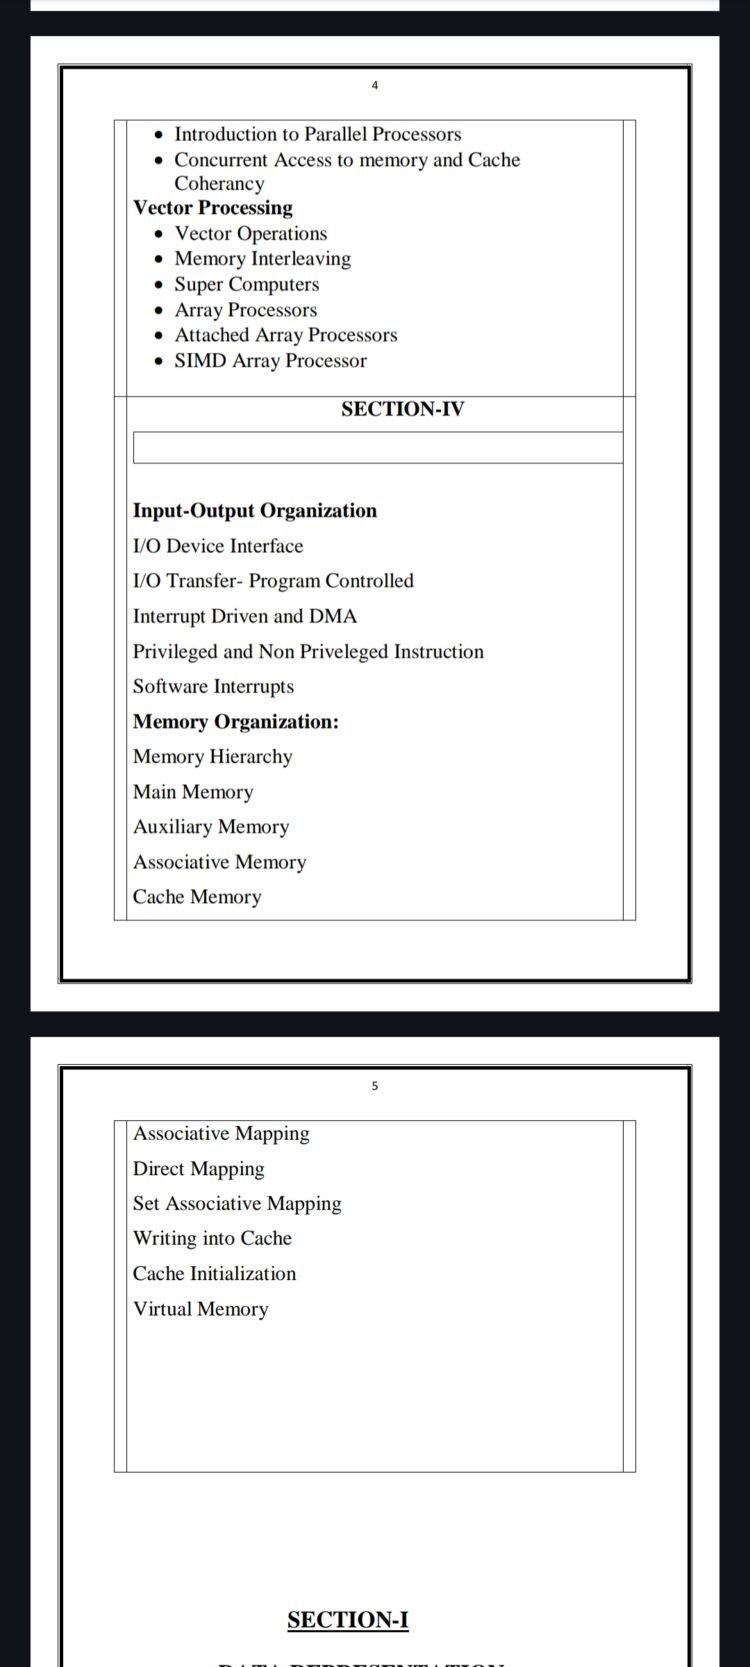 B.tech 4th Semester Computer Architecture &  Organization Notes PDF